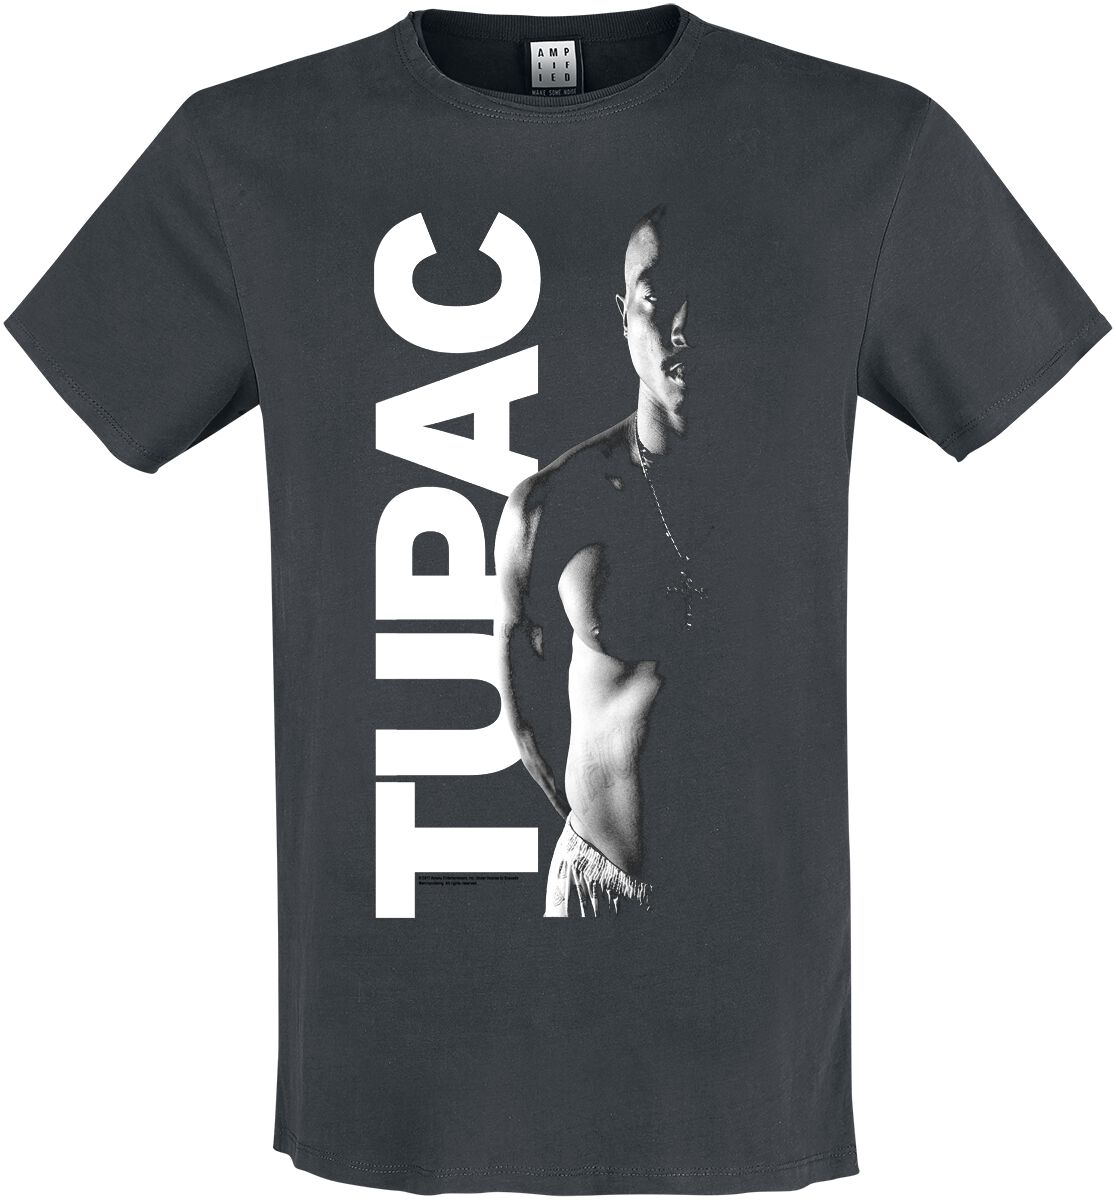 Tupac Shakur T-Shirt - Amplified Collection - Shakur - S bis 3XL - für Männer - Größe L - charcoal  - Lizenziertes Merchandise!